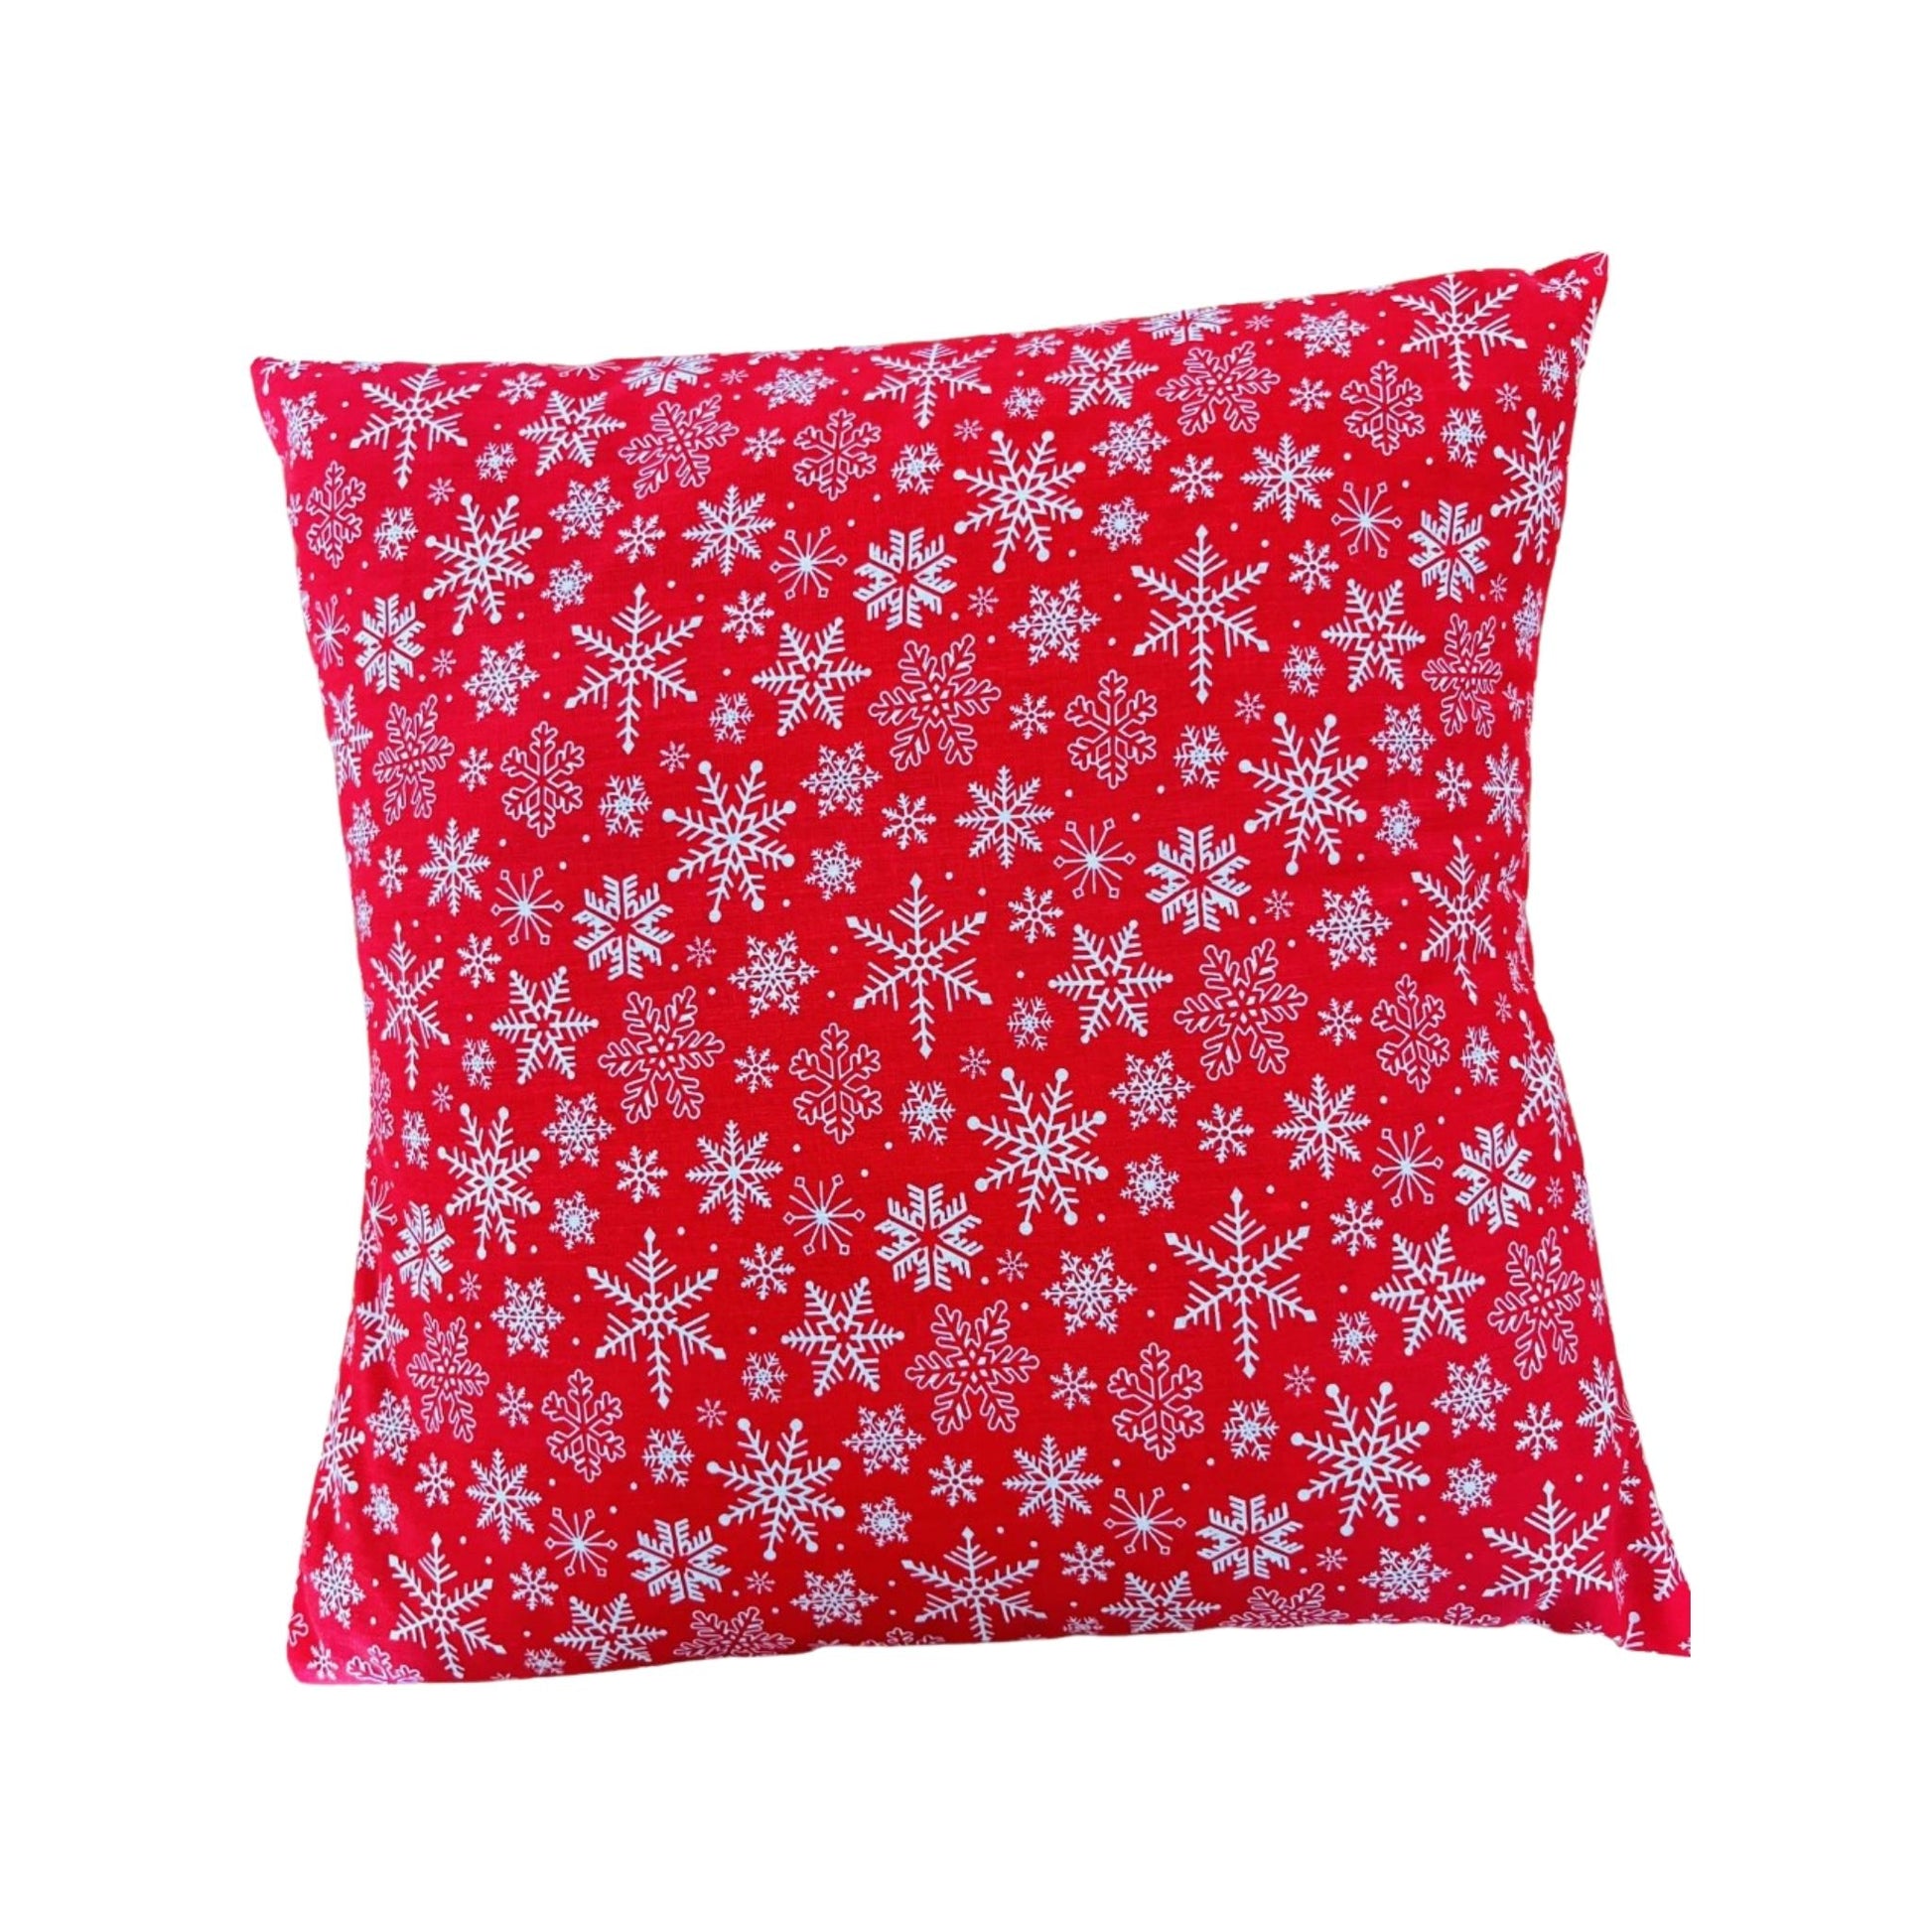 Christmas cushion cover envelope red snowflake E for Eva